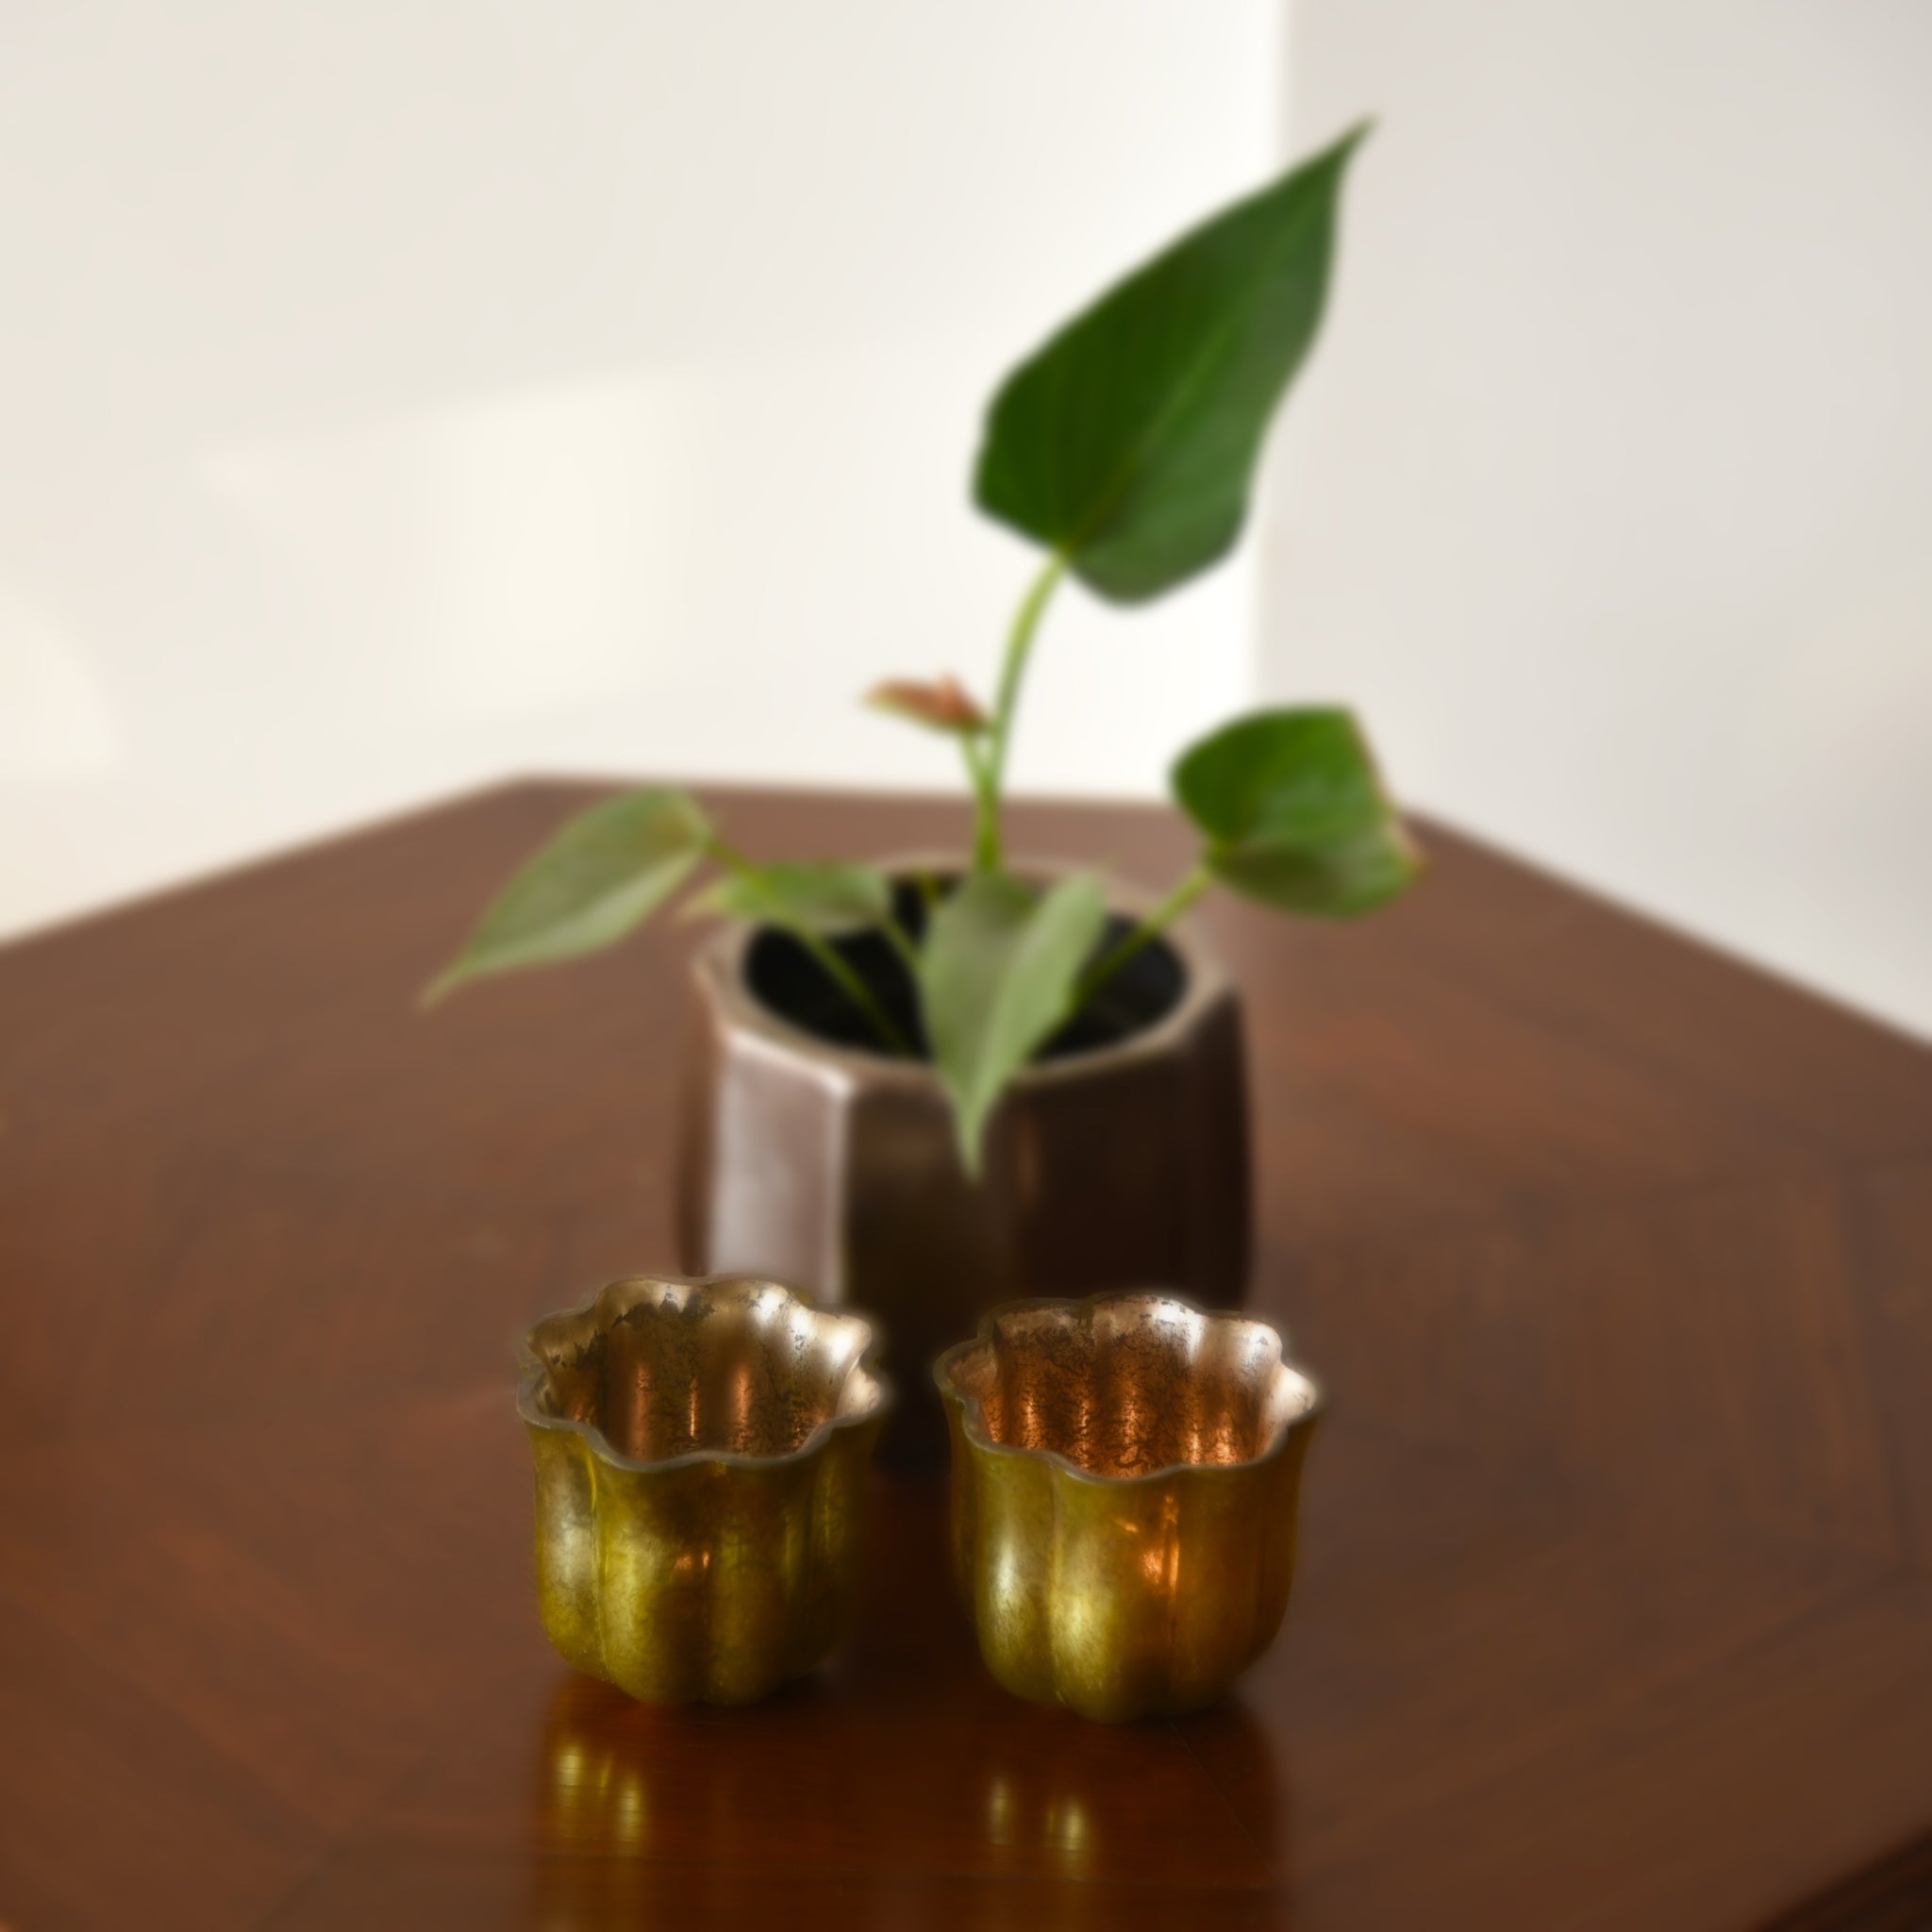 "Tulip" Antique Look Metallic Glass Glowing Votive Tea Light Candle Holder Diya in Gold Finish 1 BHK Interiors